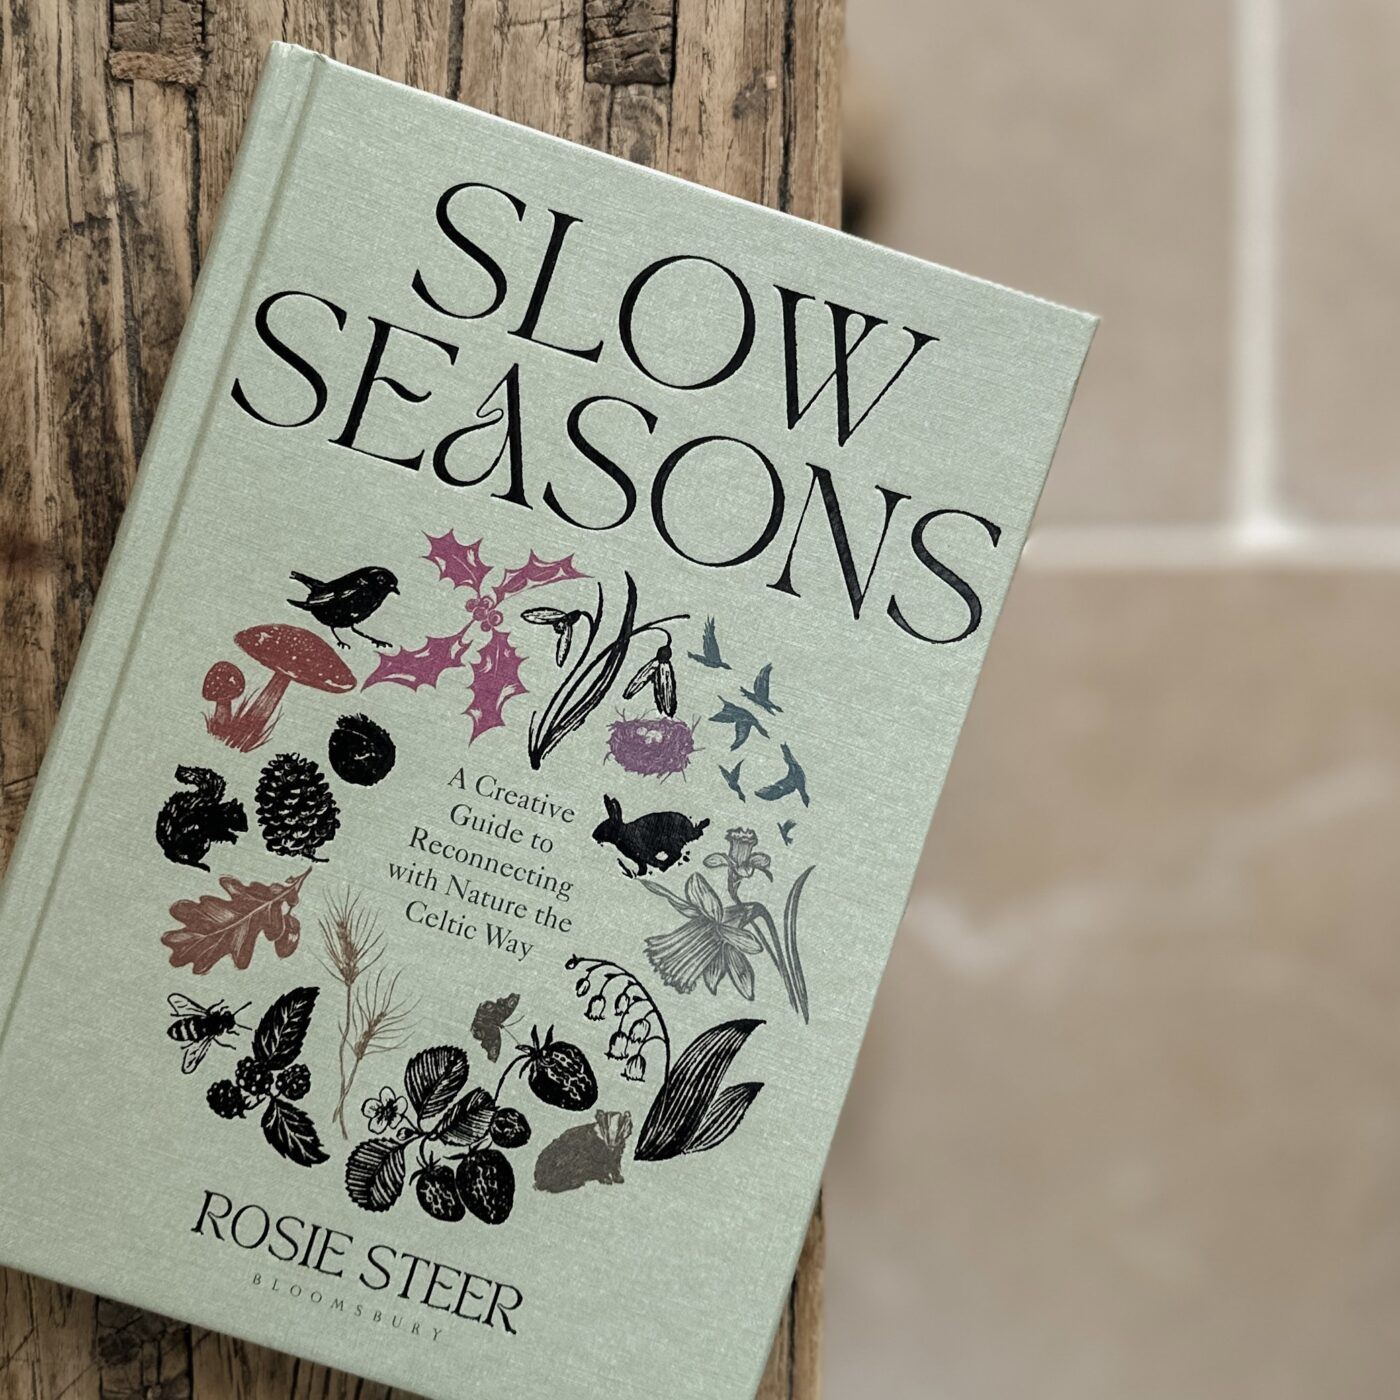 Slow Seasons book review